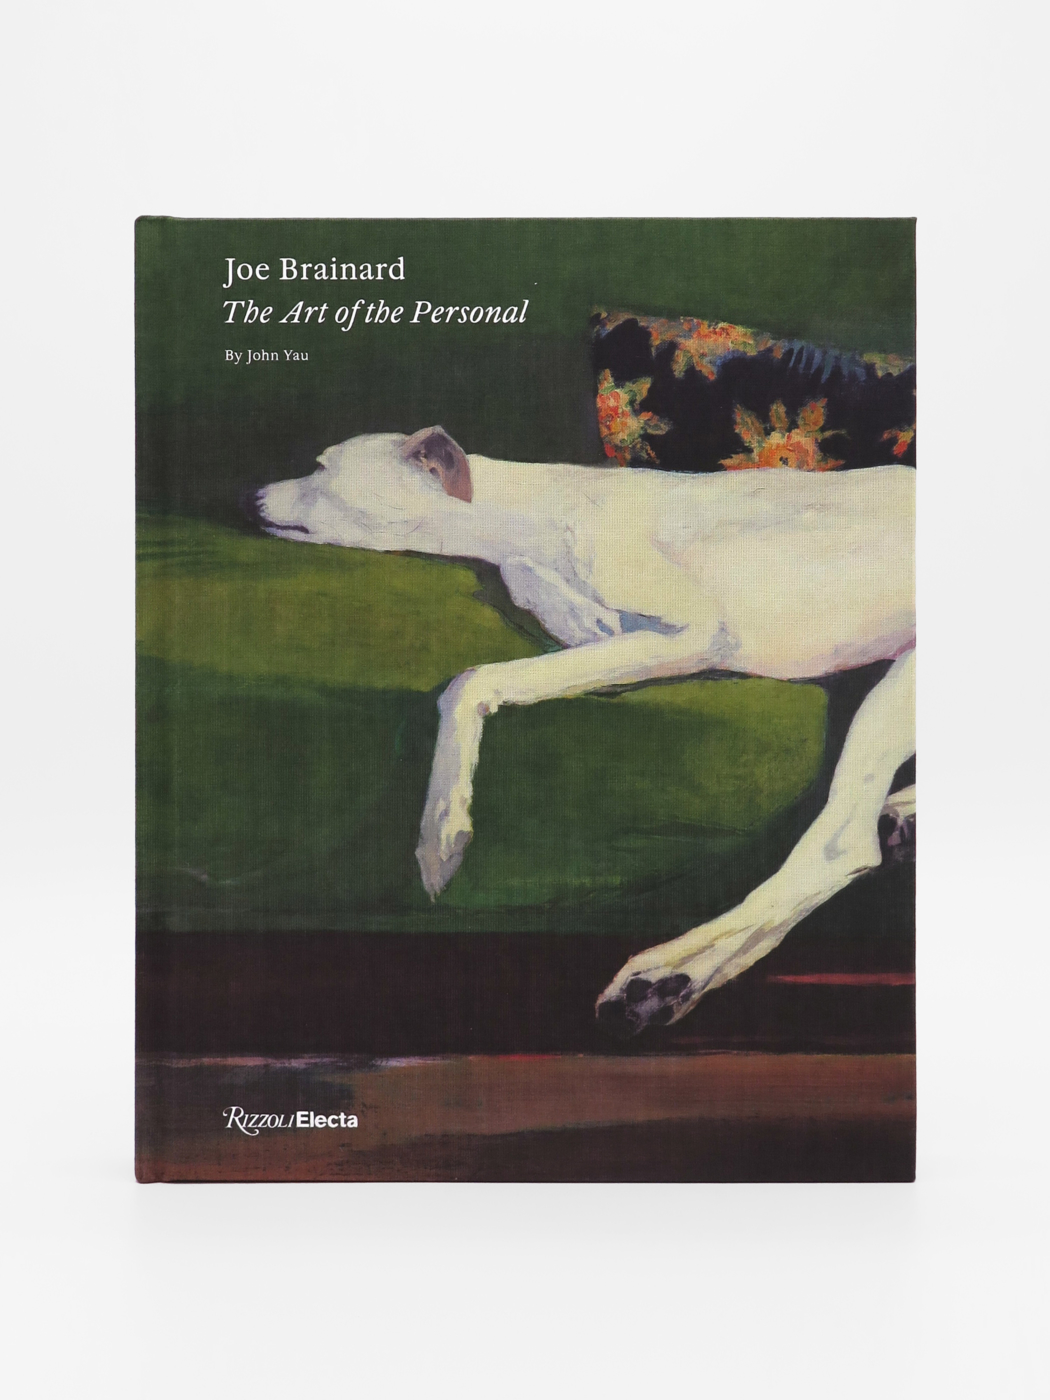 Joe Brainard, The Art of the Personal